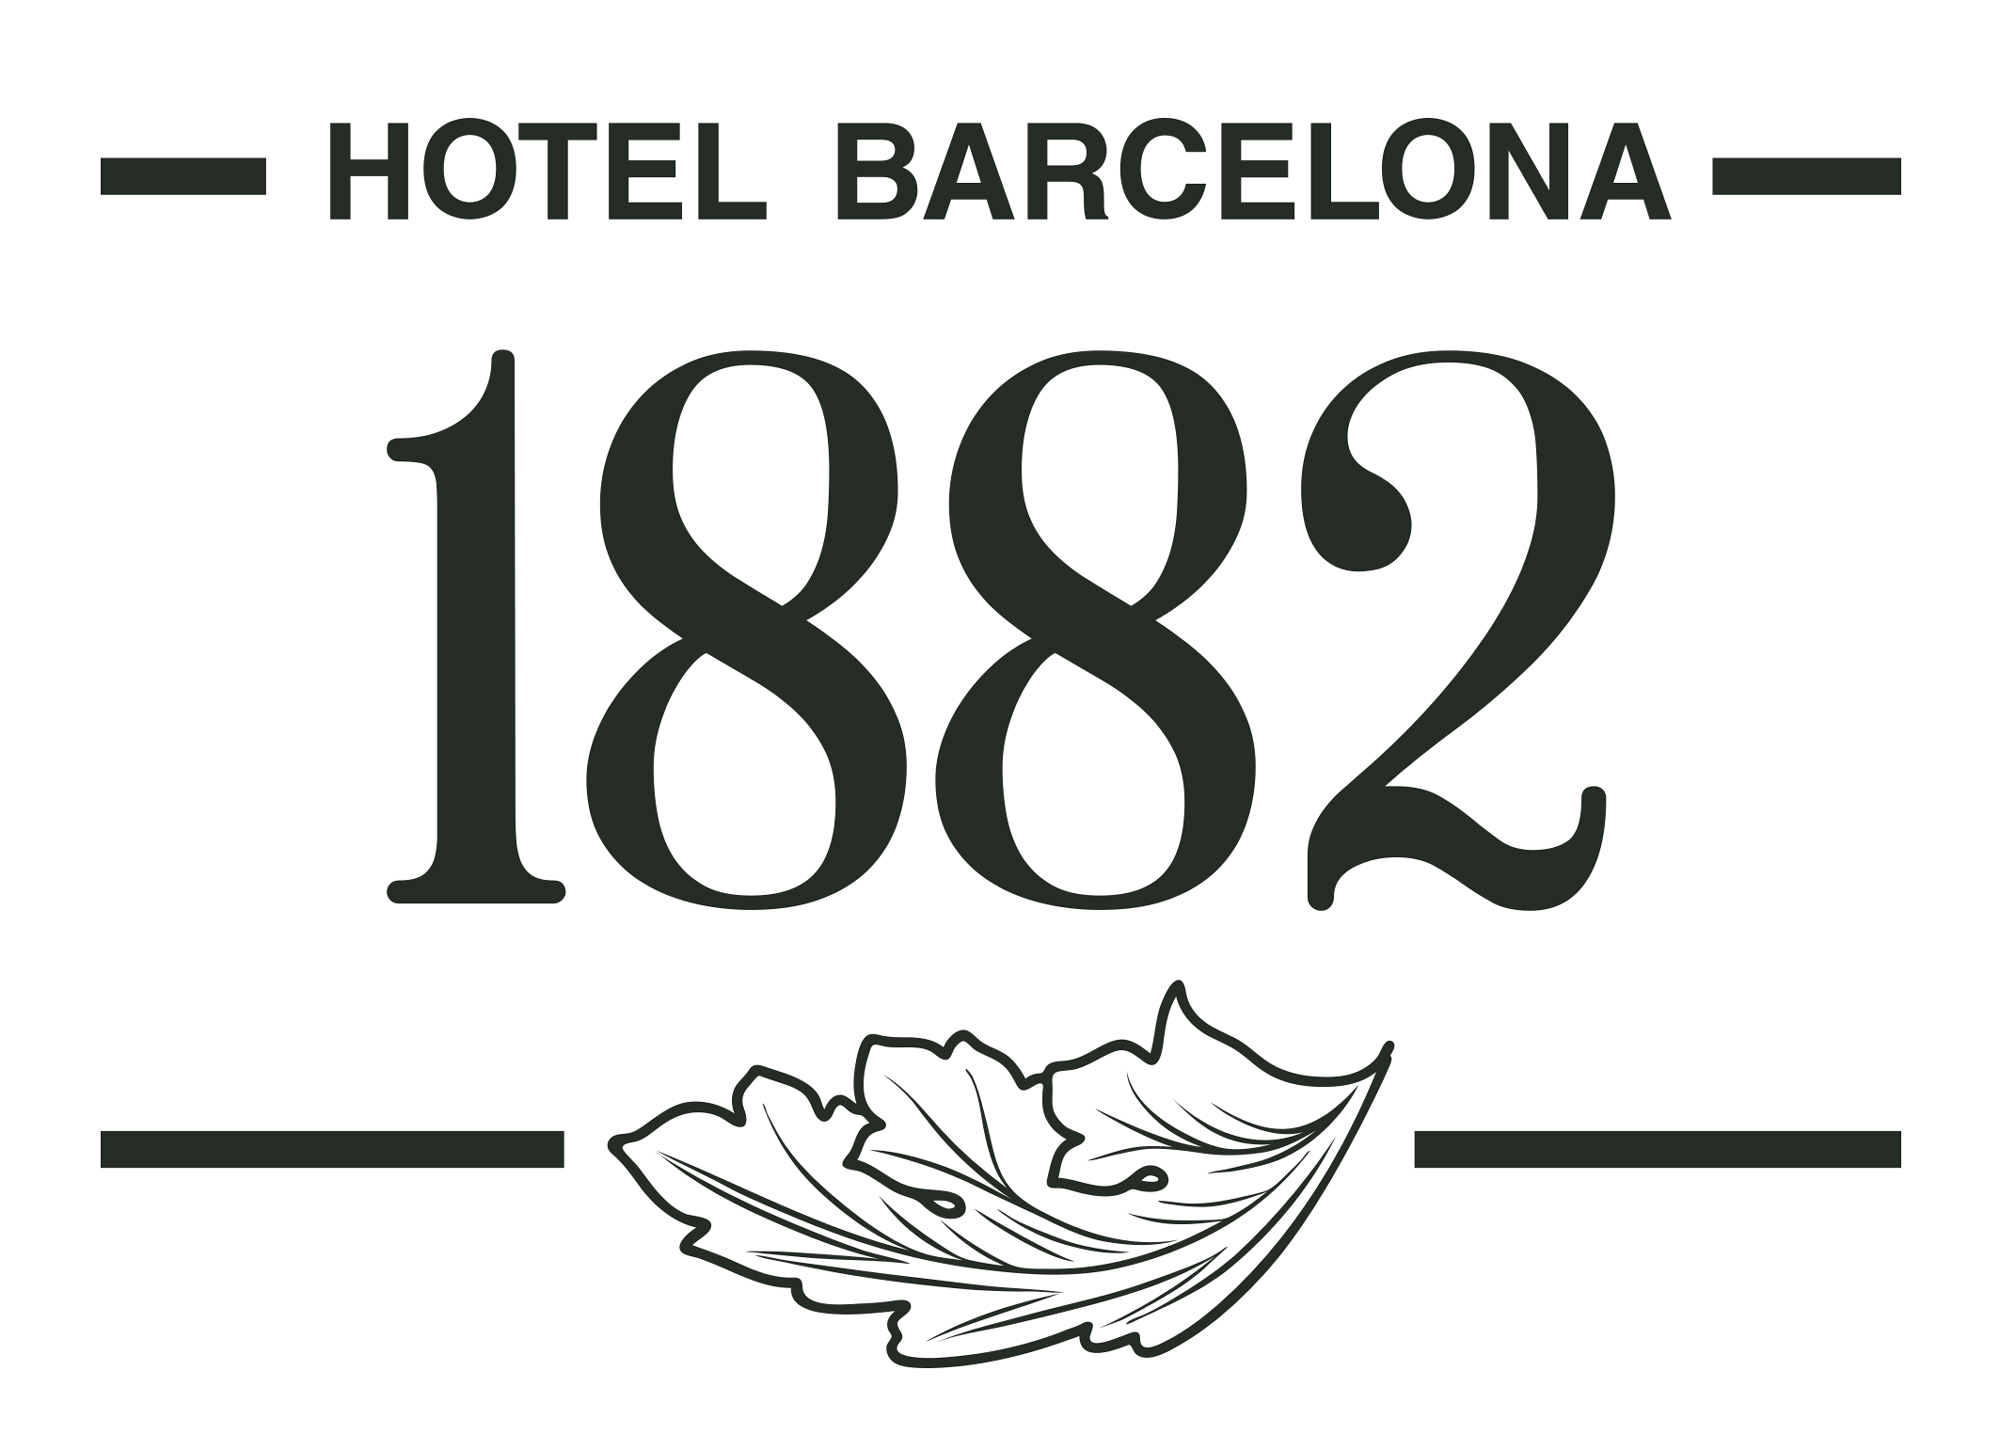 Hotel Barcelona 1882